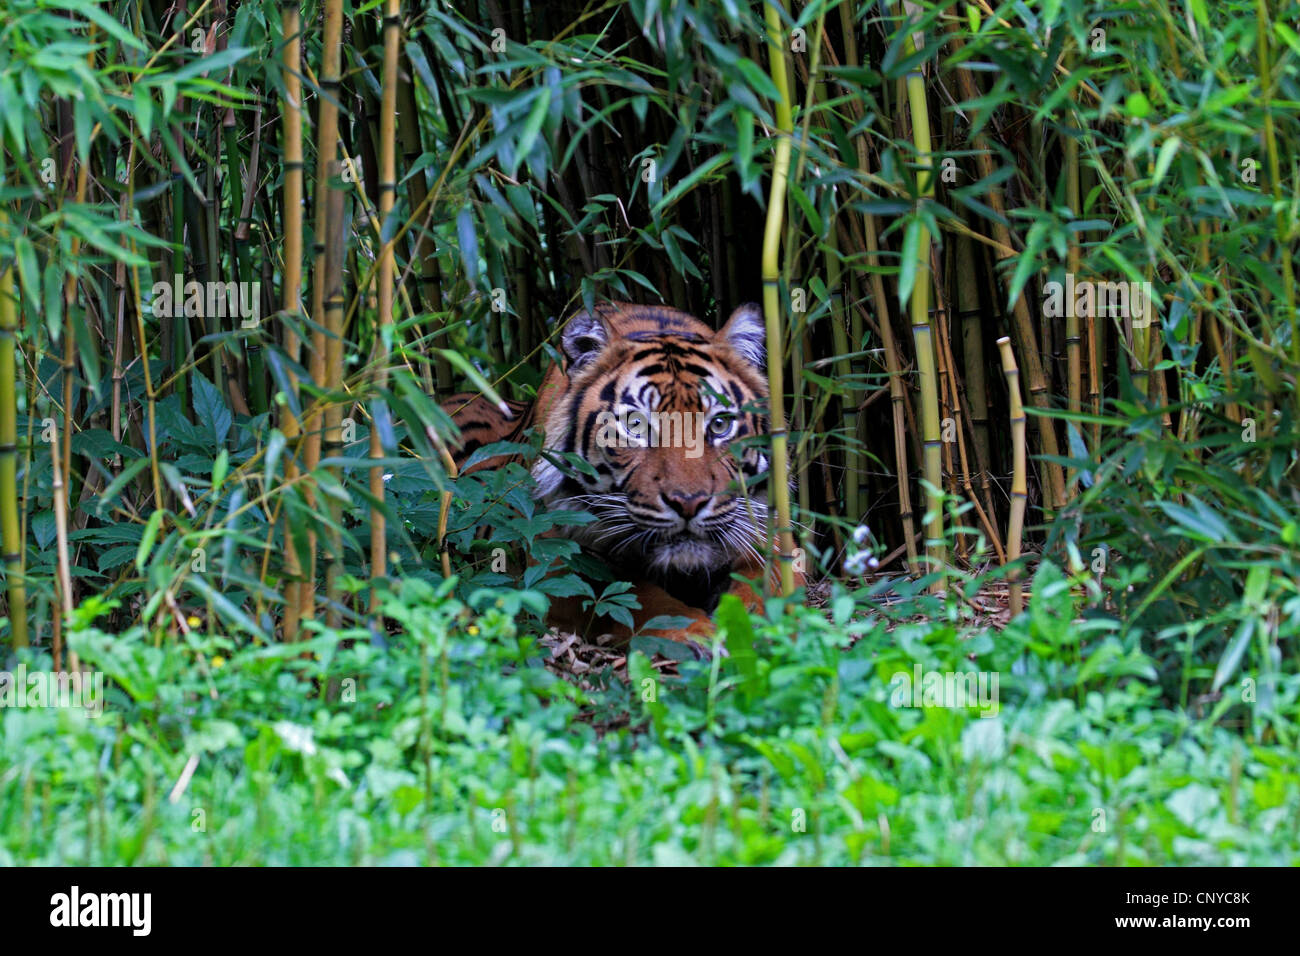 Sumatran tiger (Panthera tigris sumatrae), looking out of bamboo grove, portrait Stock Photo